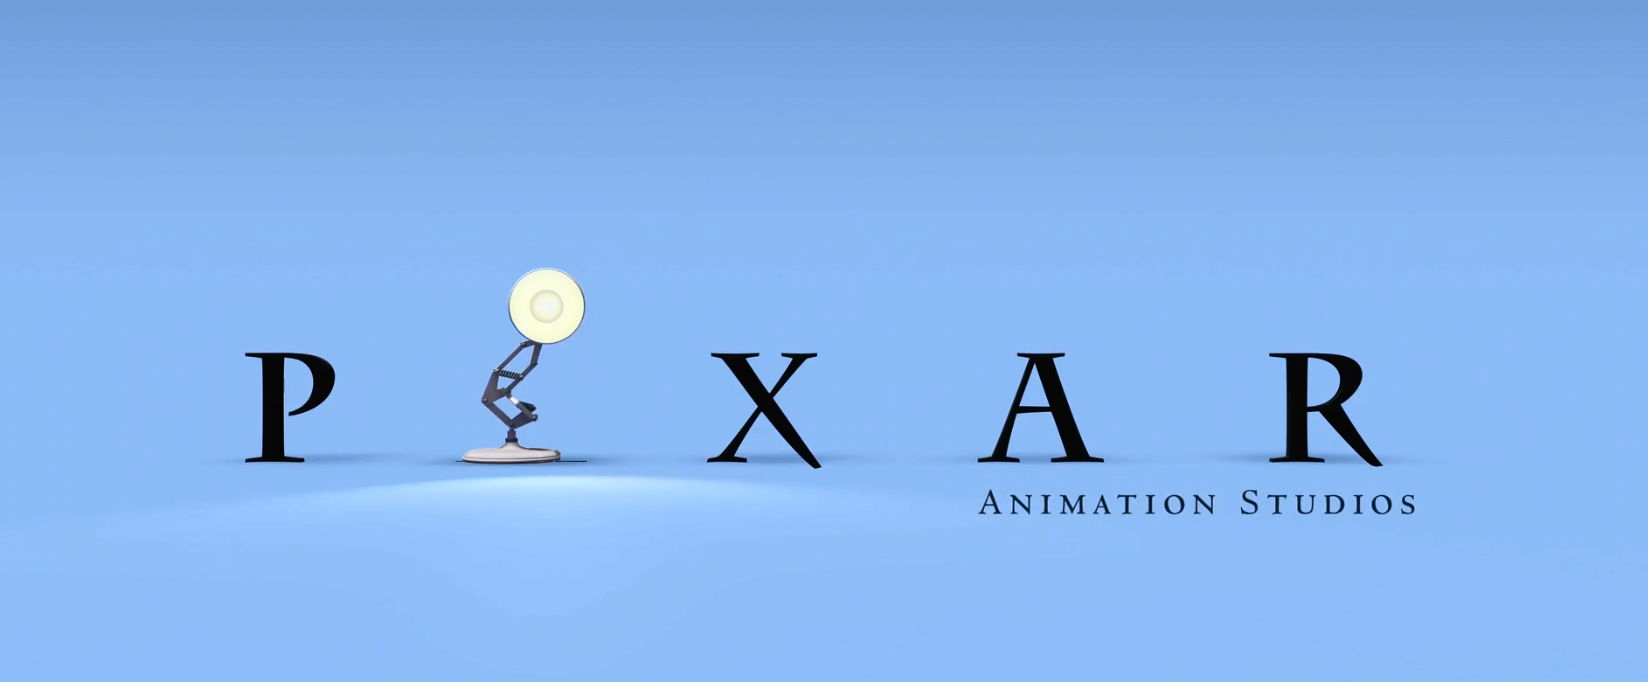 pixar animation studios logo wiki